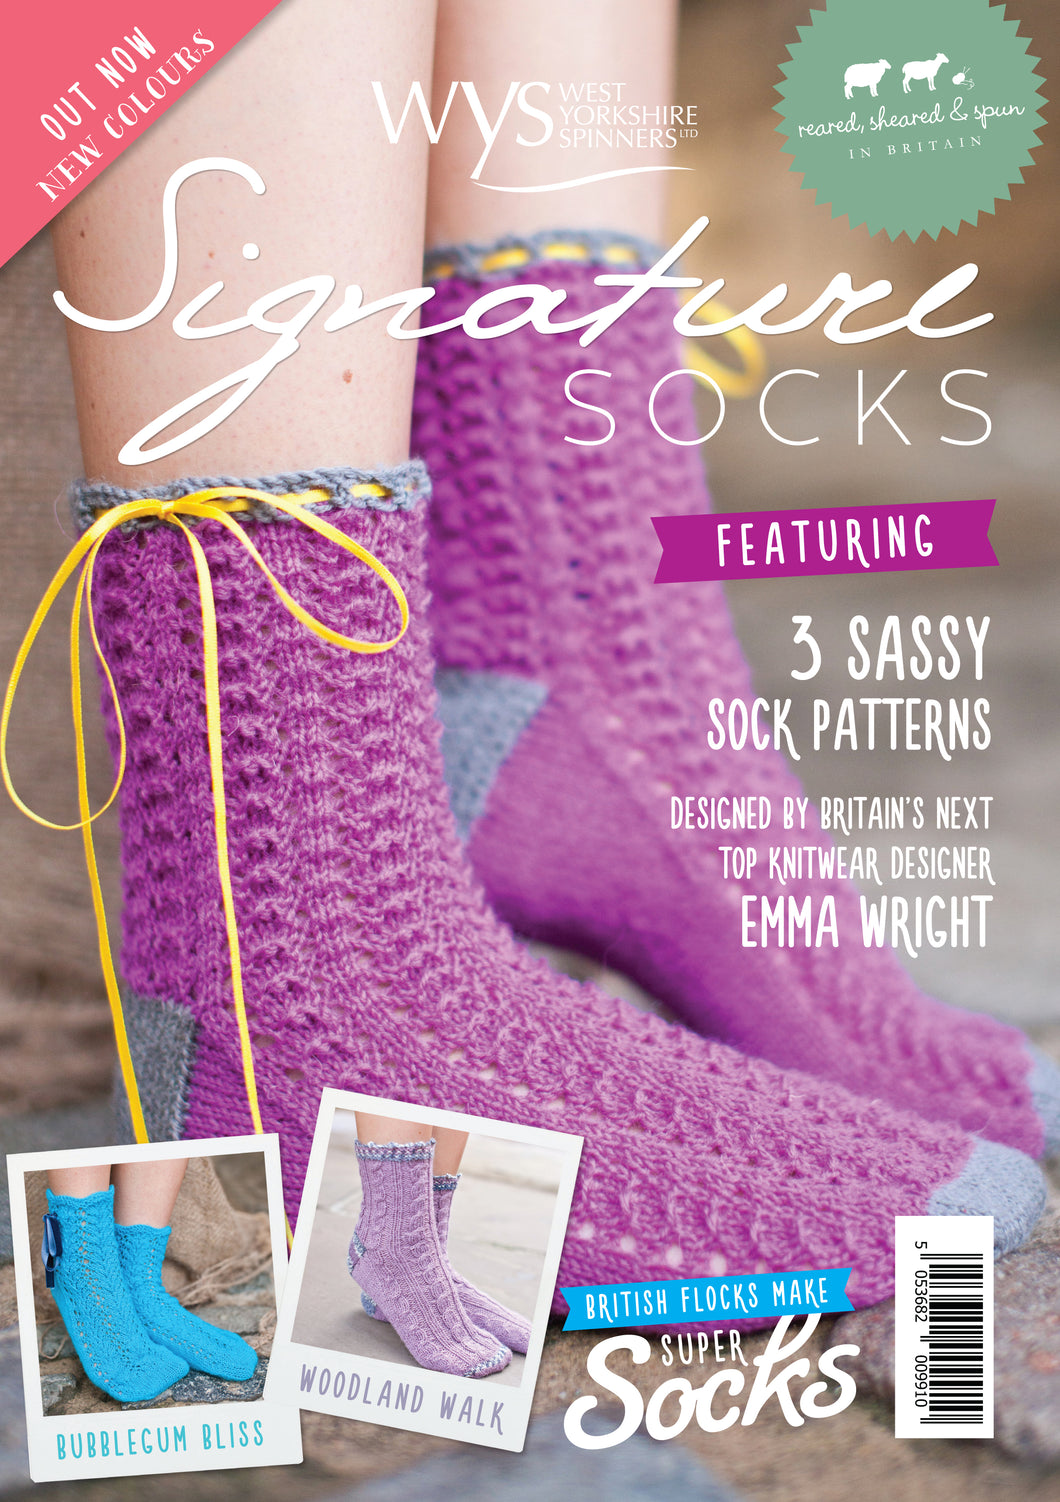 WYS Signature Socks Designed by Emma Wright